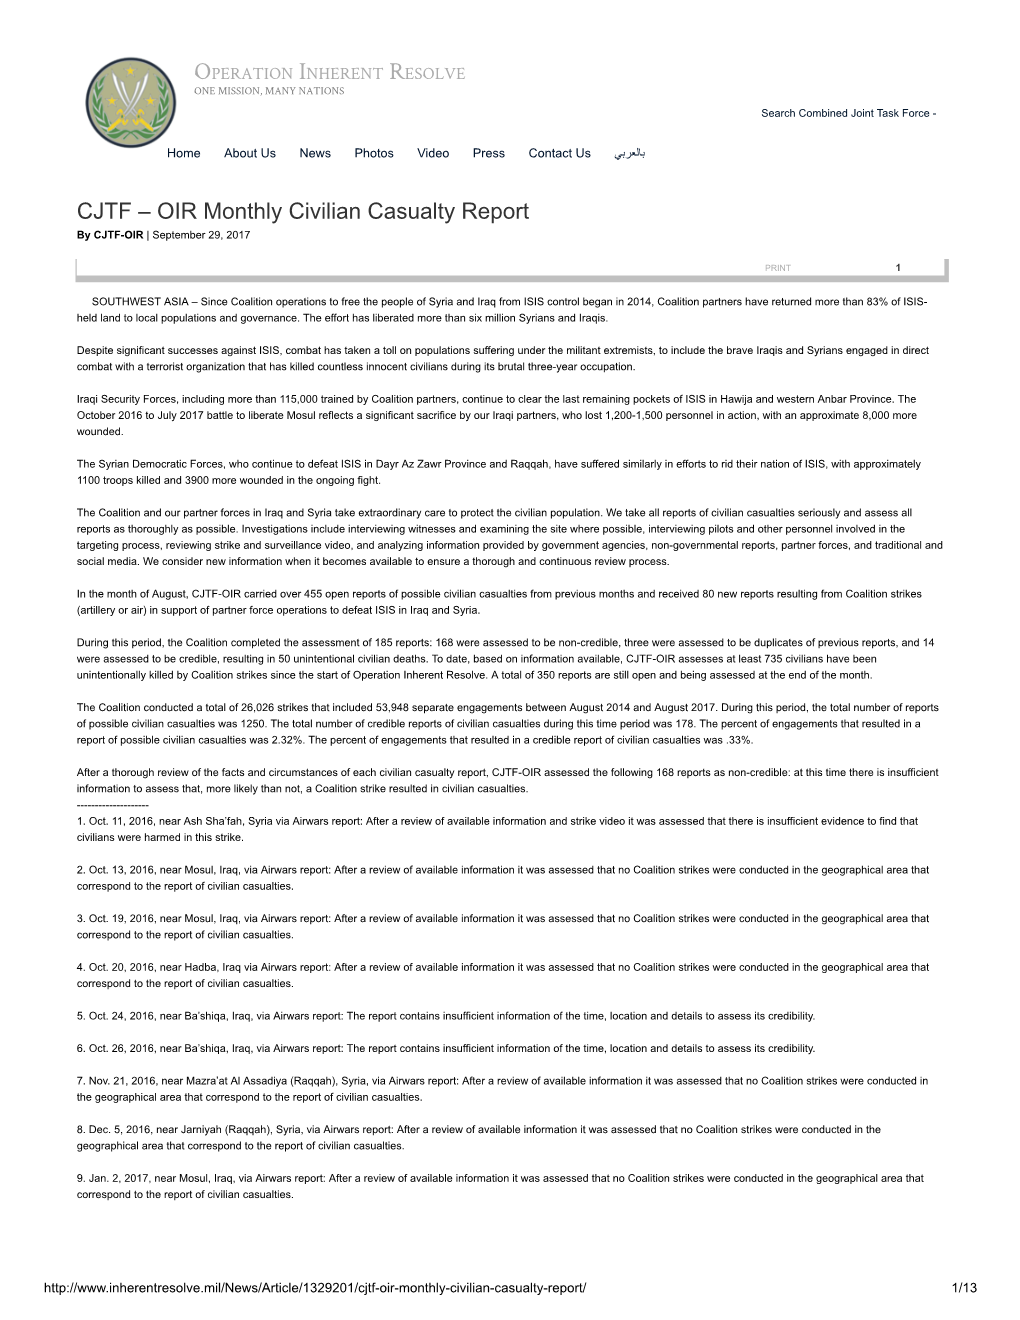 CJTF – OIR Monthly Civilian Casualty Report by CJTF-OIR | September 29, 2017